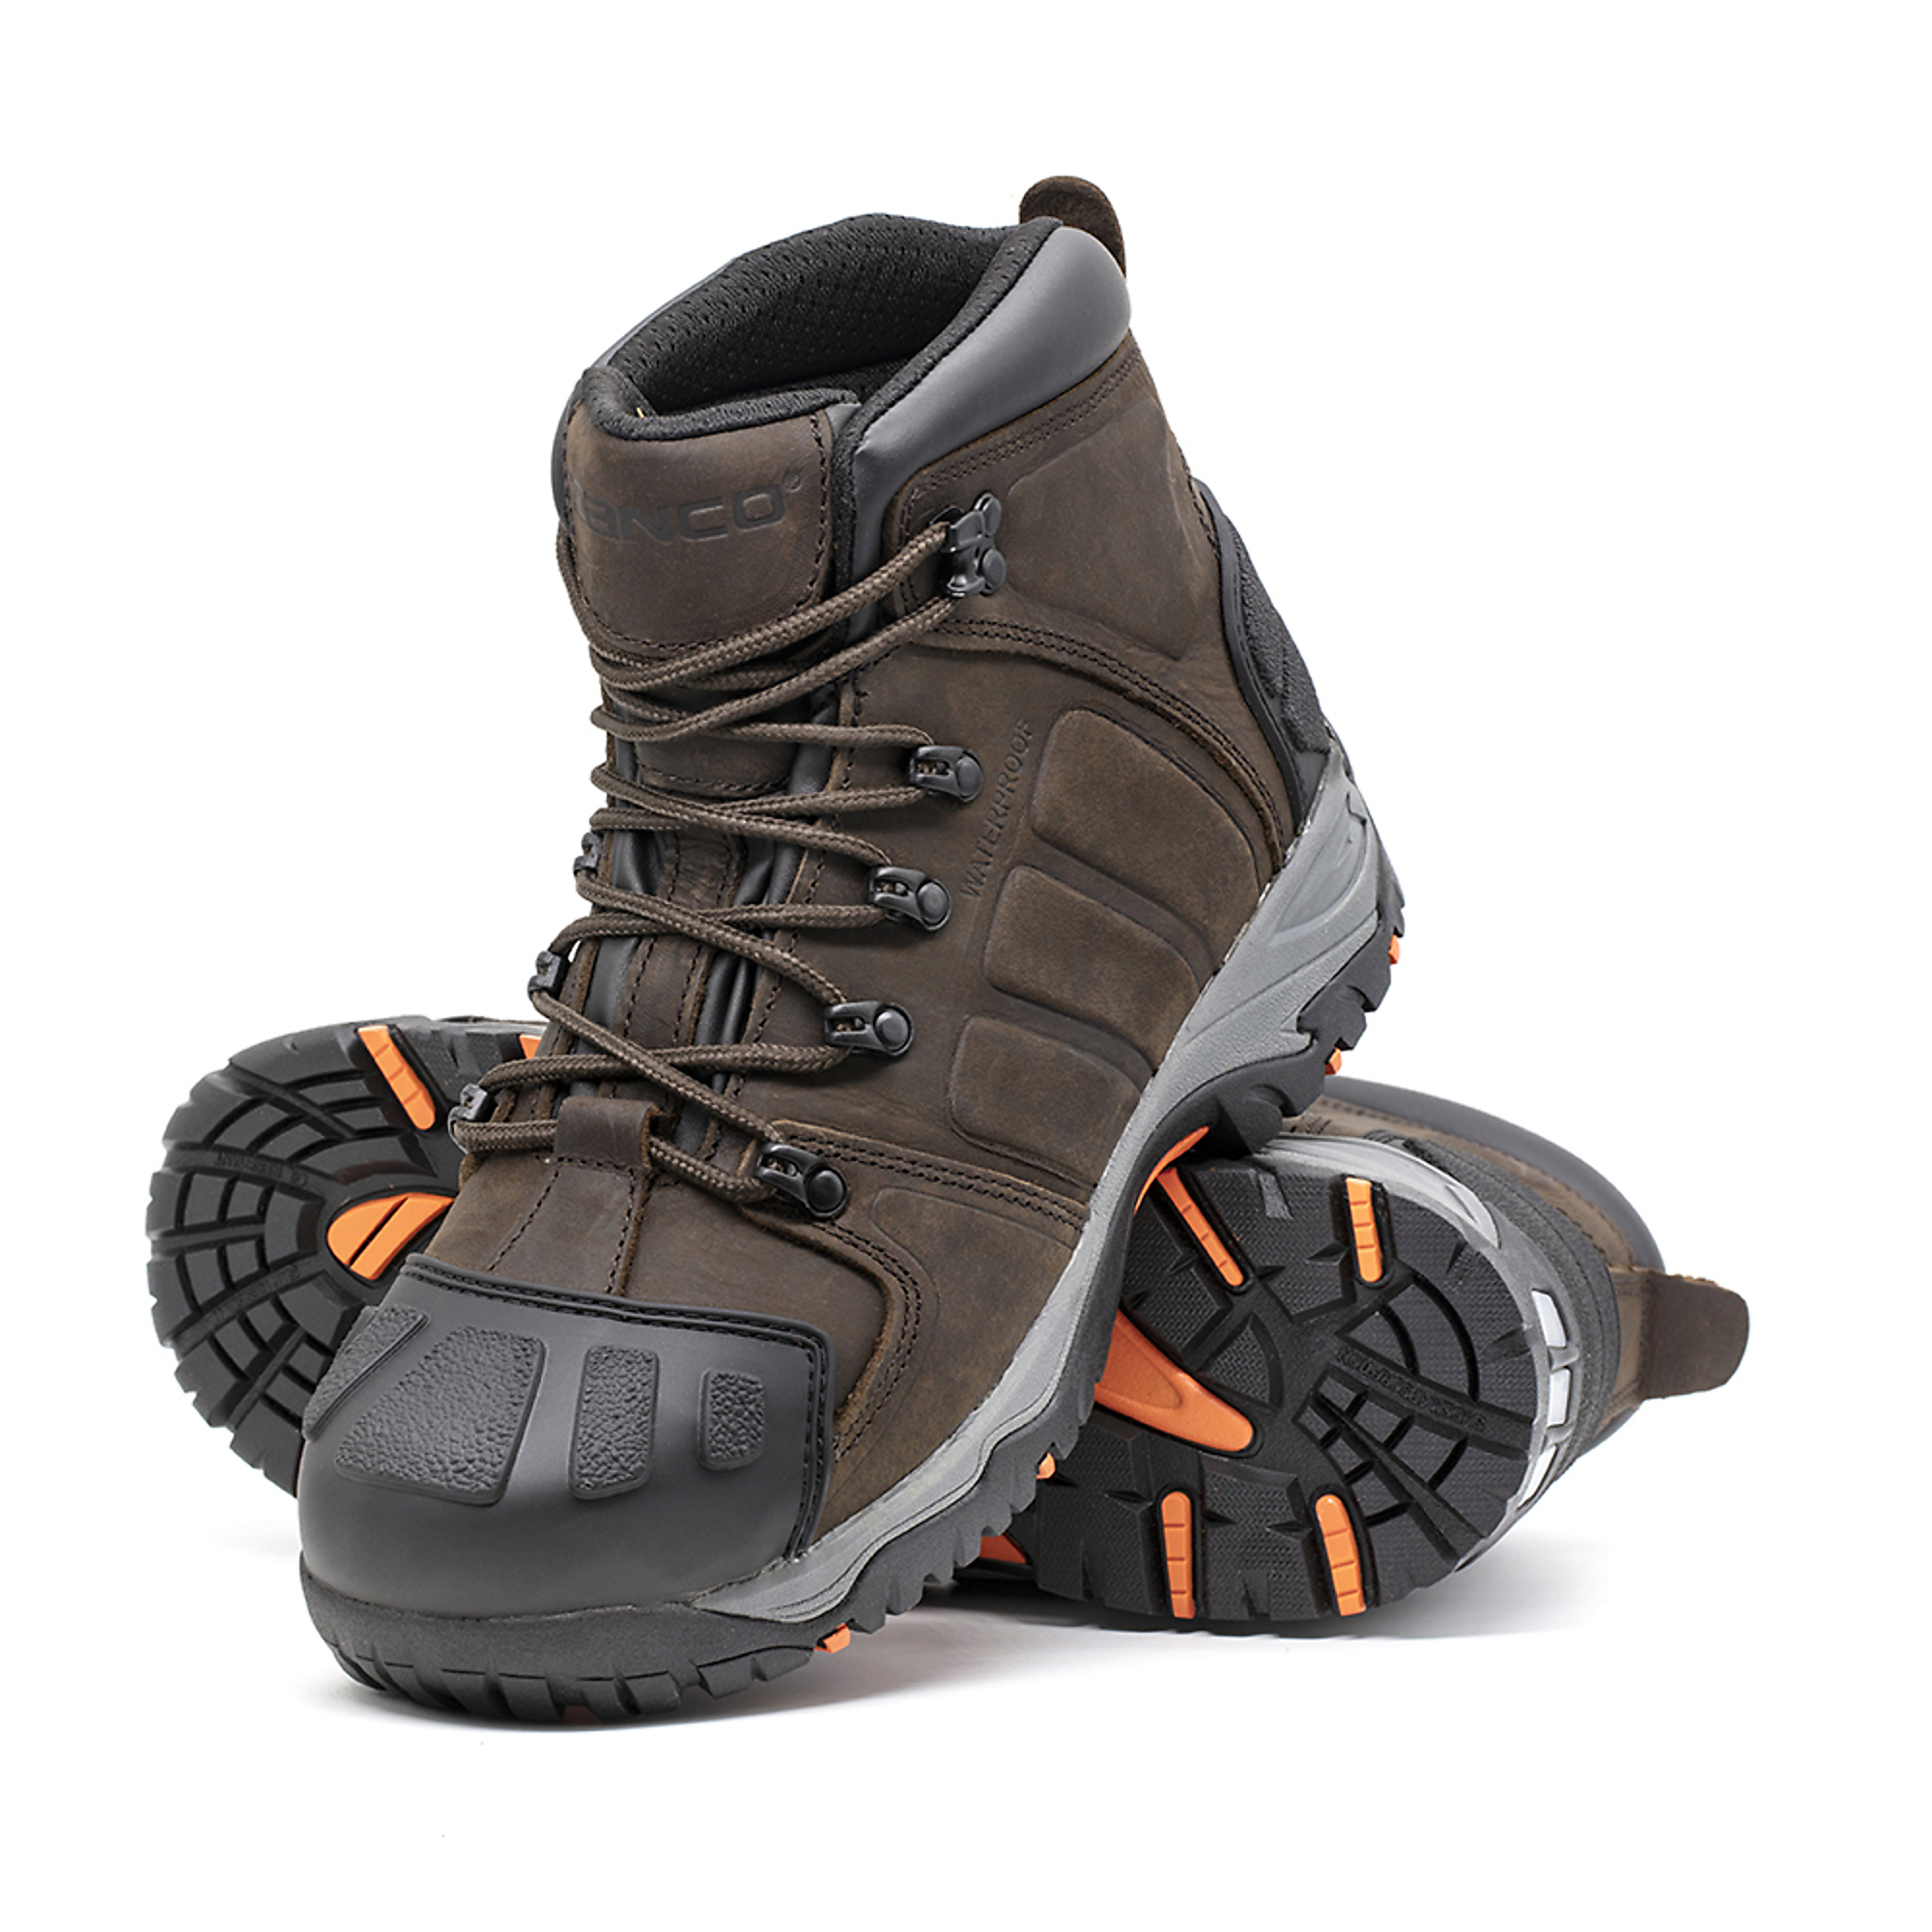 Zanco, Men's Waterproof,Steel toe,EH,Safety boots, Size 7, Width Medium, Color BROWN, Model 8235-02-7